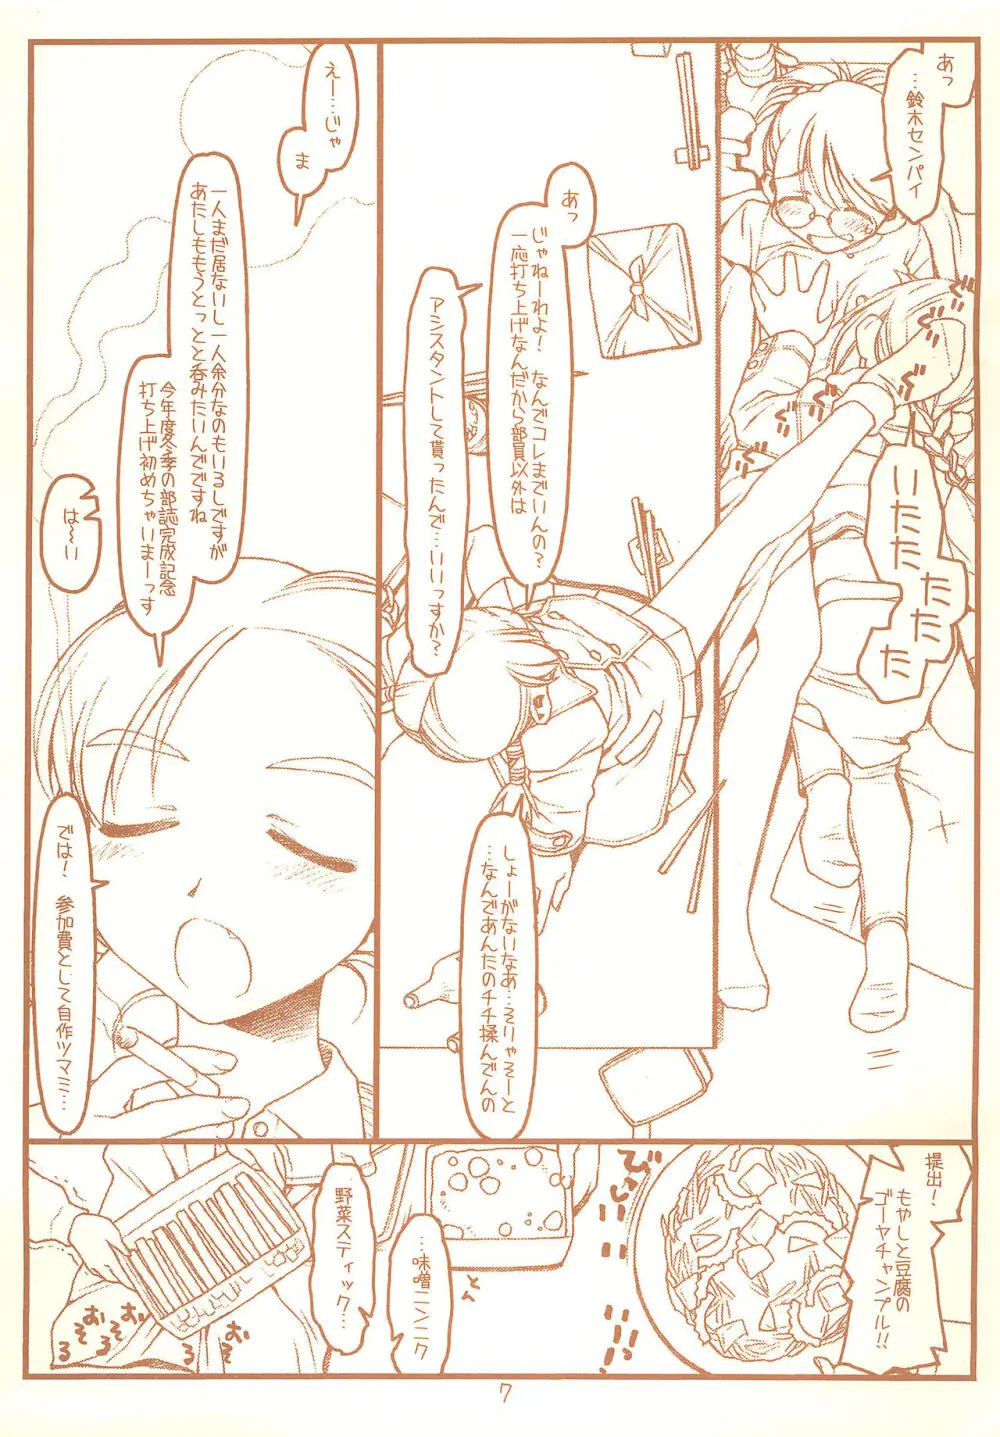 SATOHSAN+YAMADAKUN2 RANGE 1.02 A STEREORANGE PRODUCT 7ページ